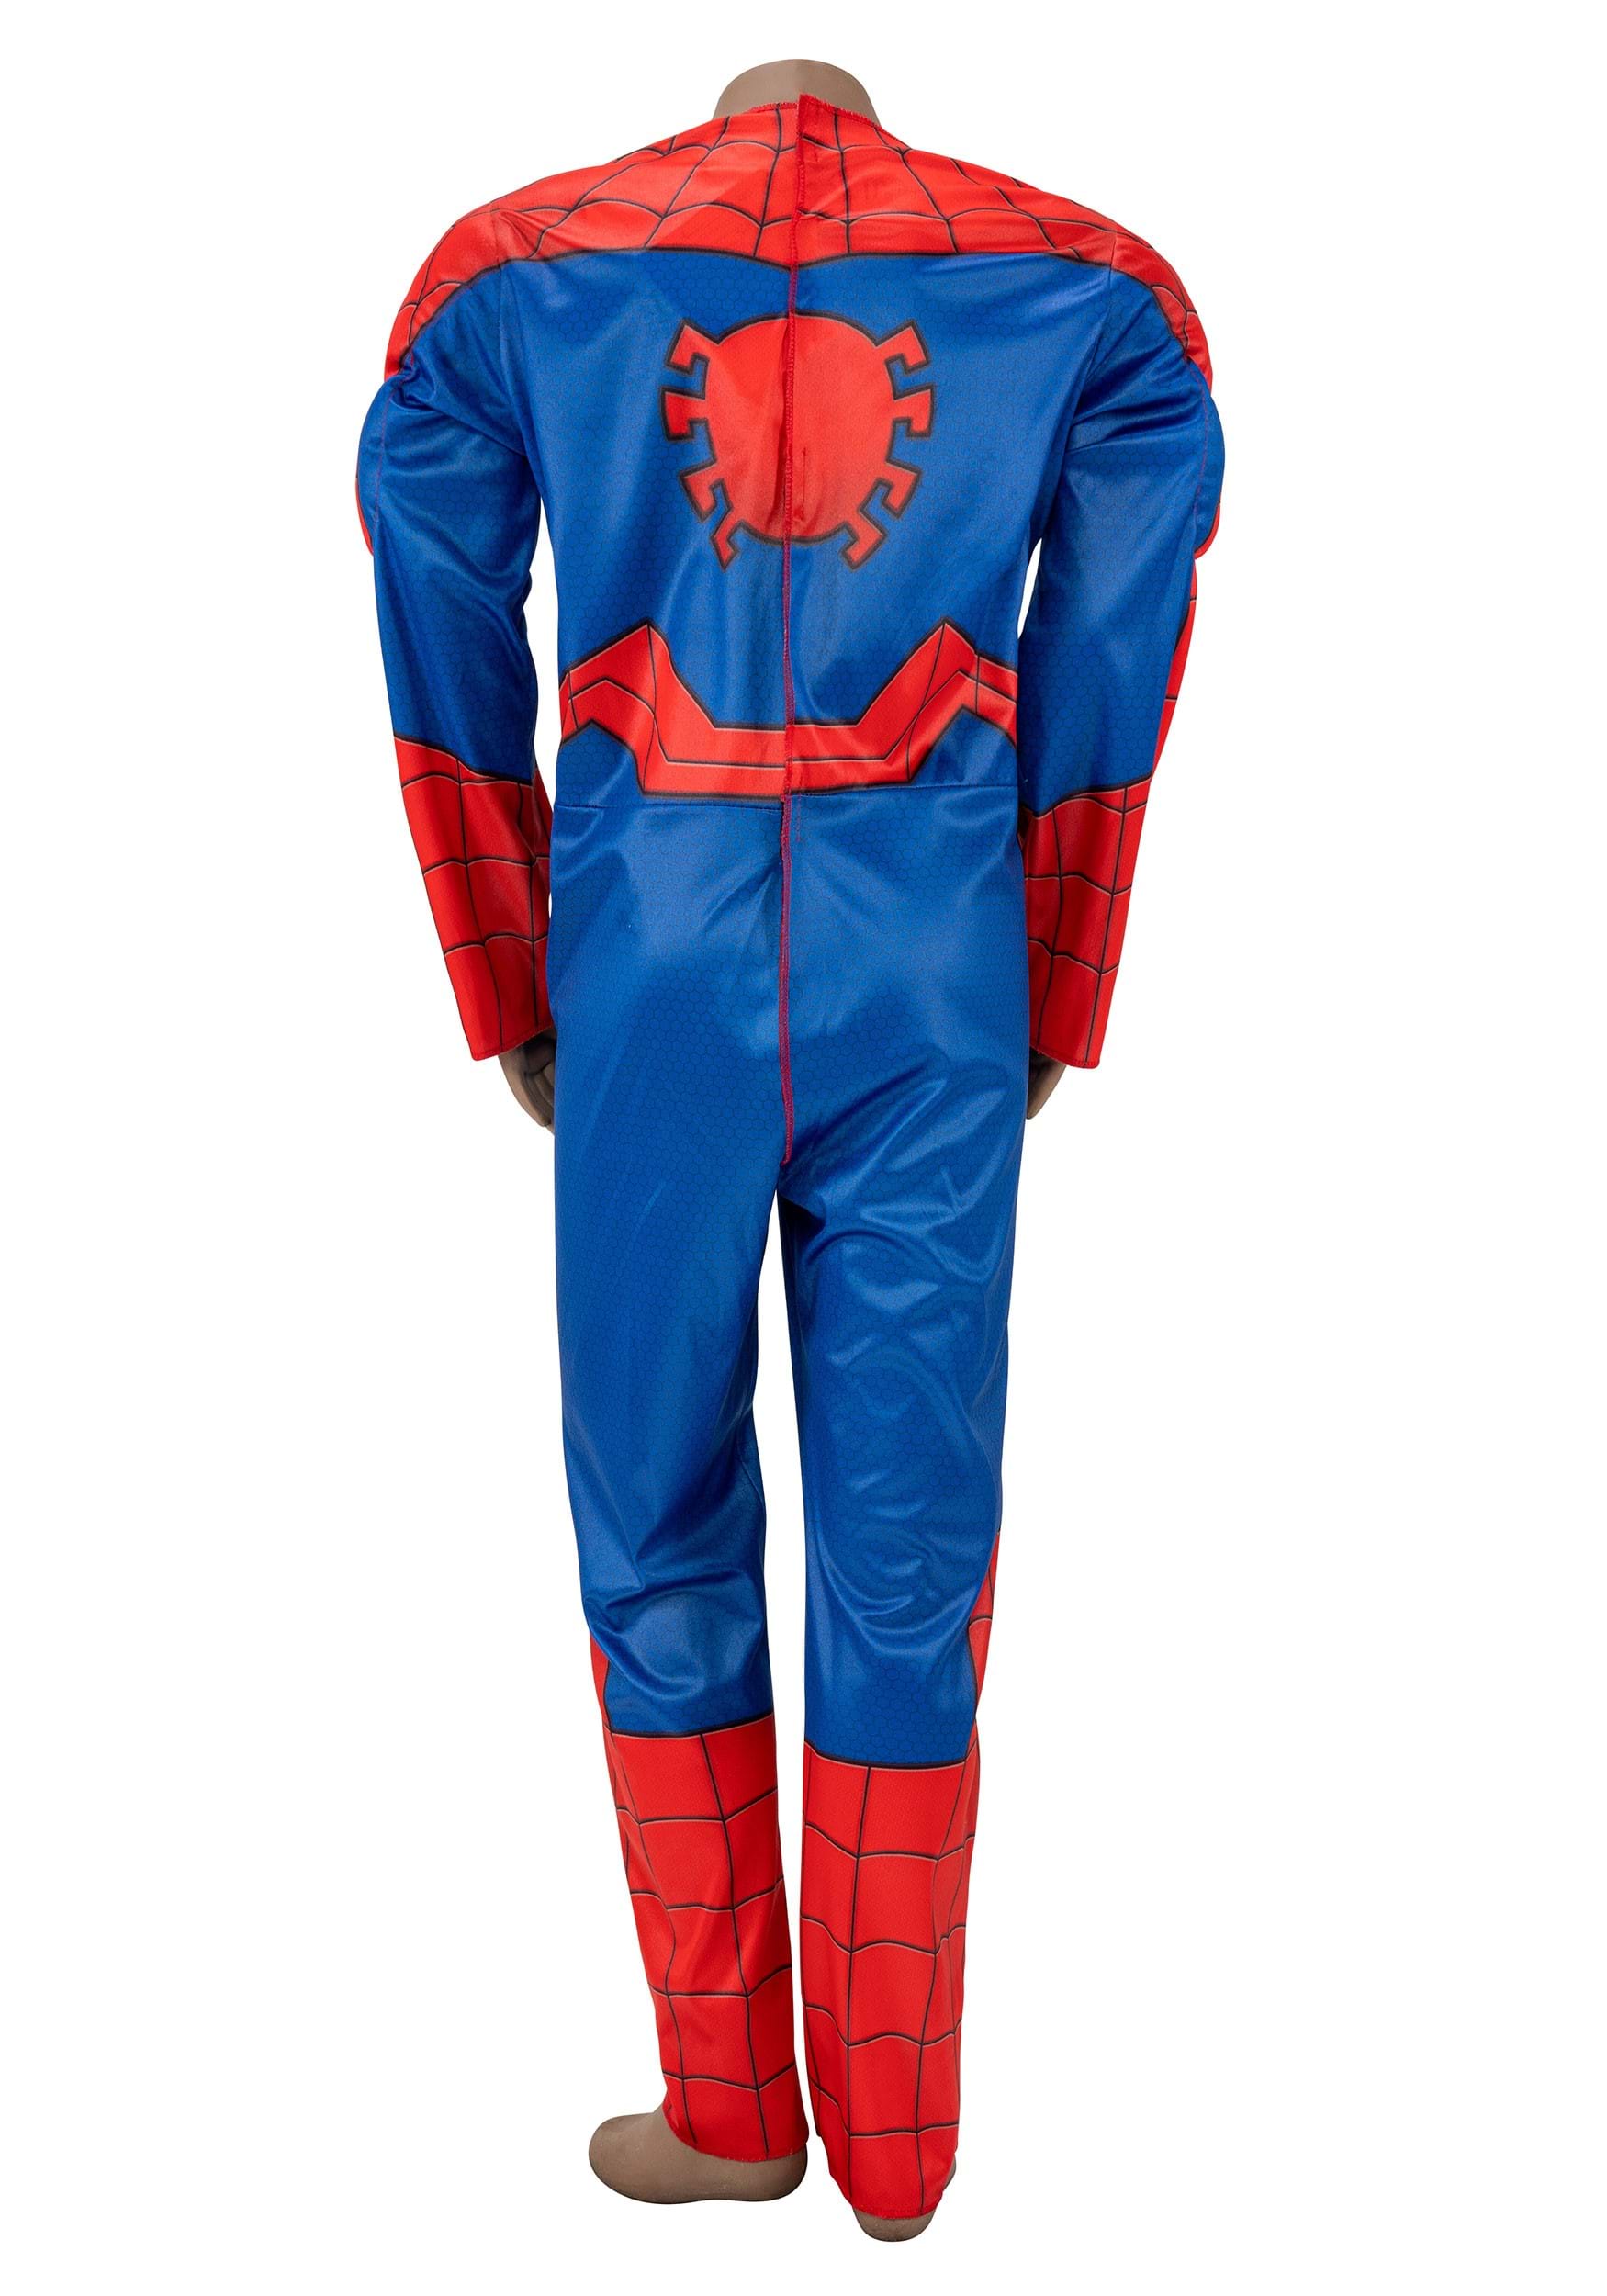 Adaptive Kid's Spider-Man Costume , Adaptive Superhero Costumes